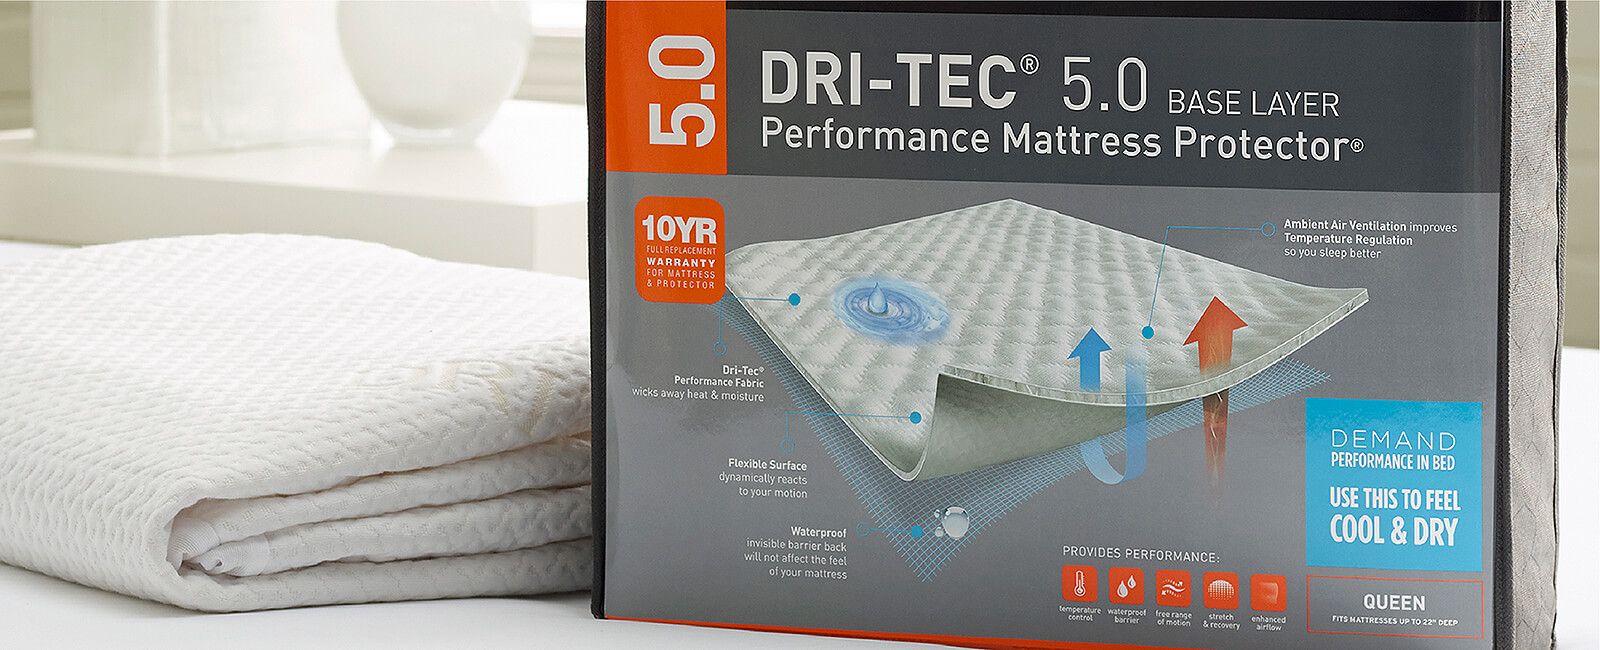 bedgear cooling mattress protector